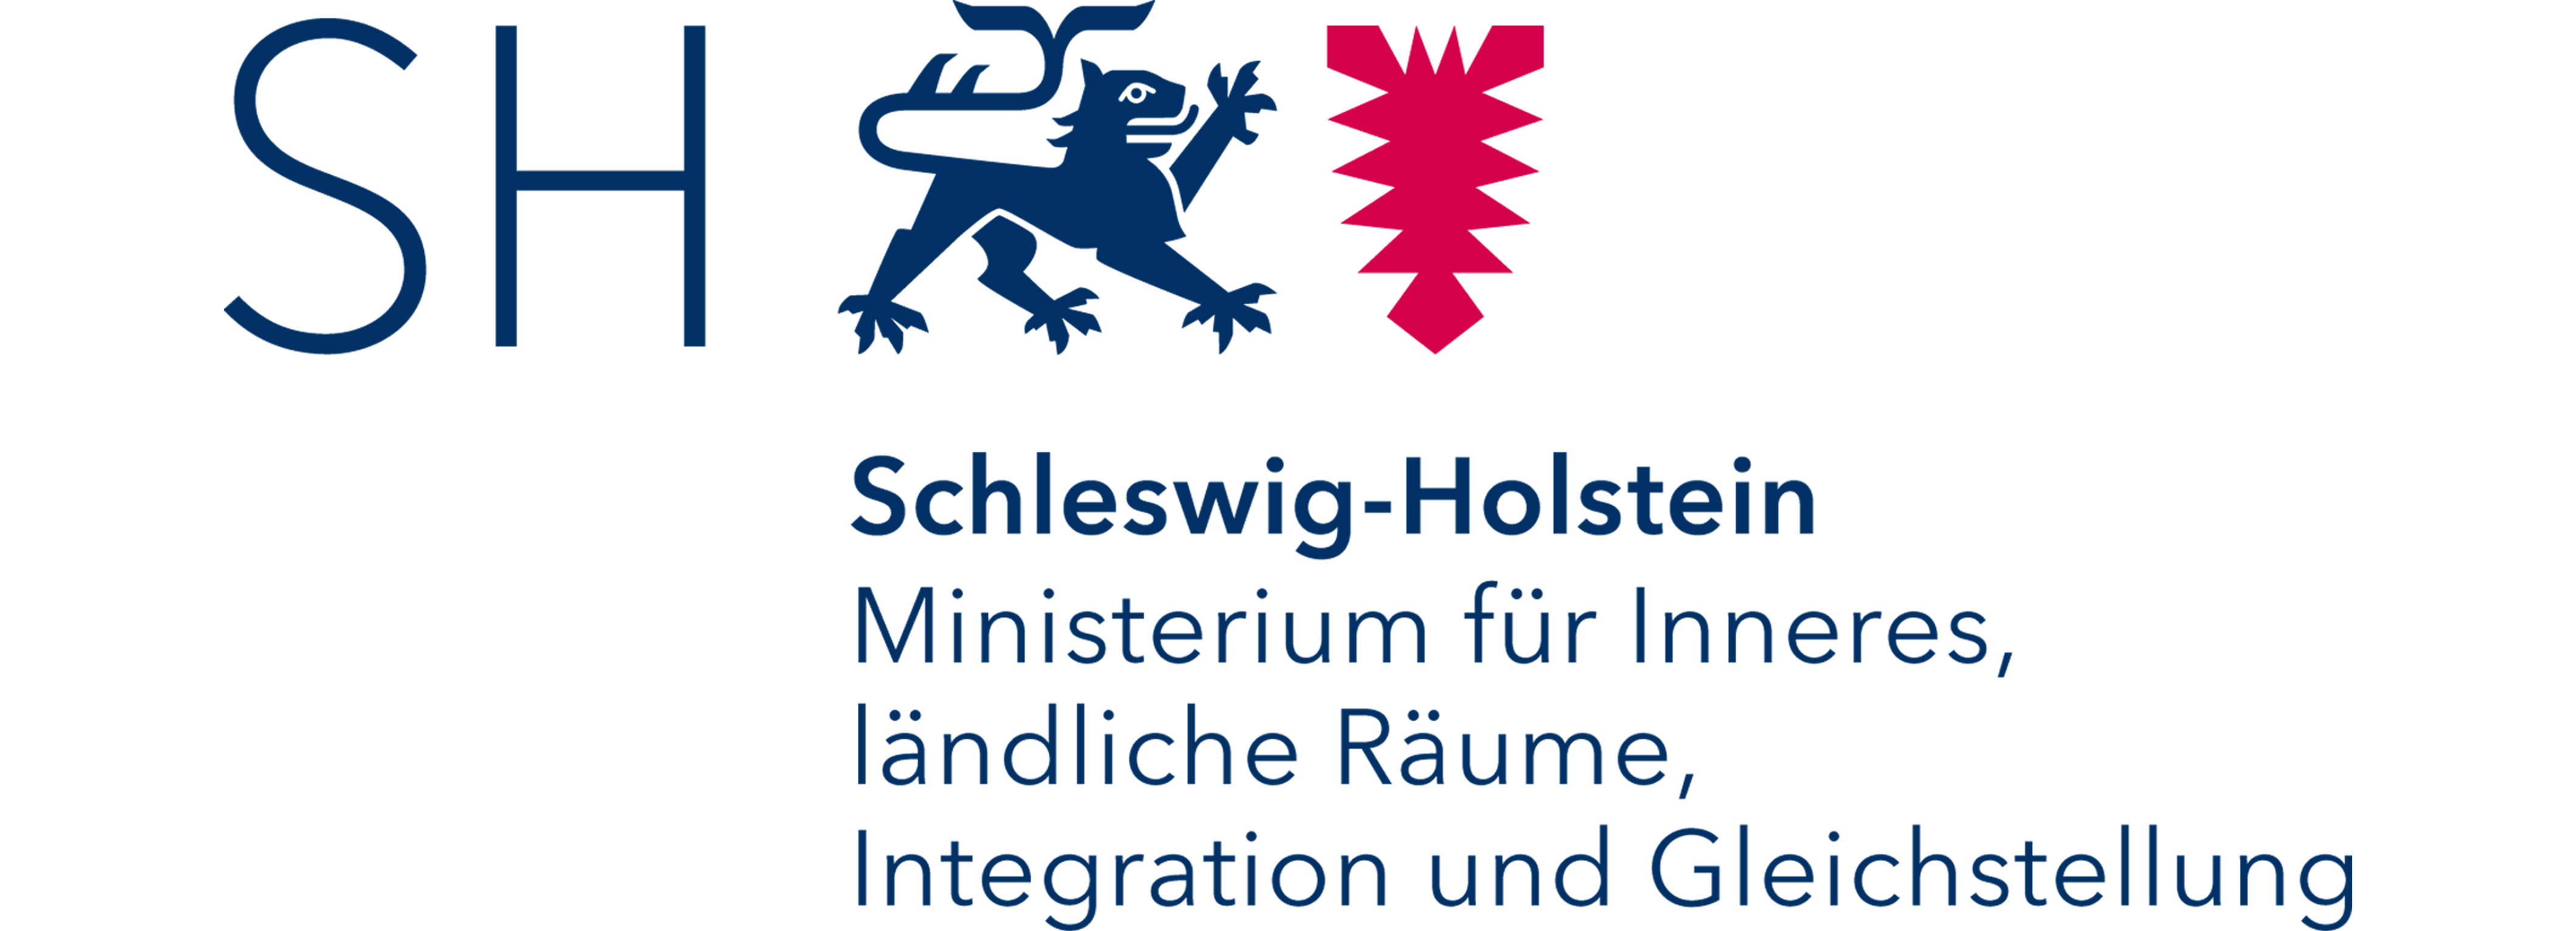 https://www.schleswig-holstein.de/DE/Landesregierung/IV/iv_node.html